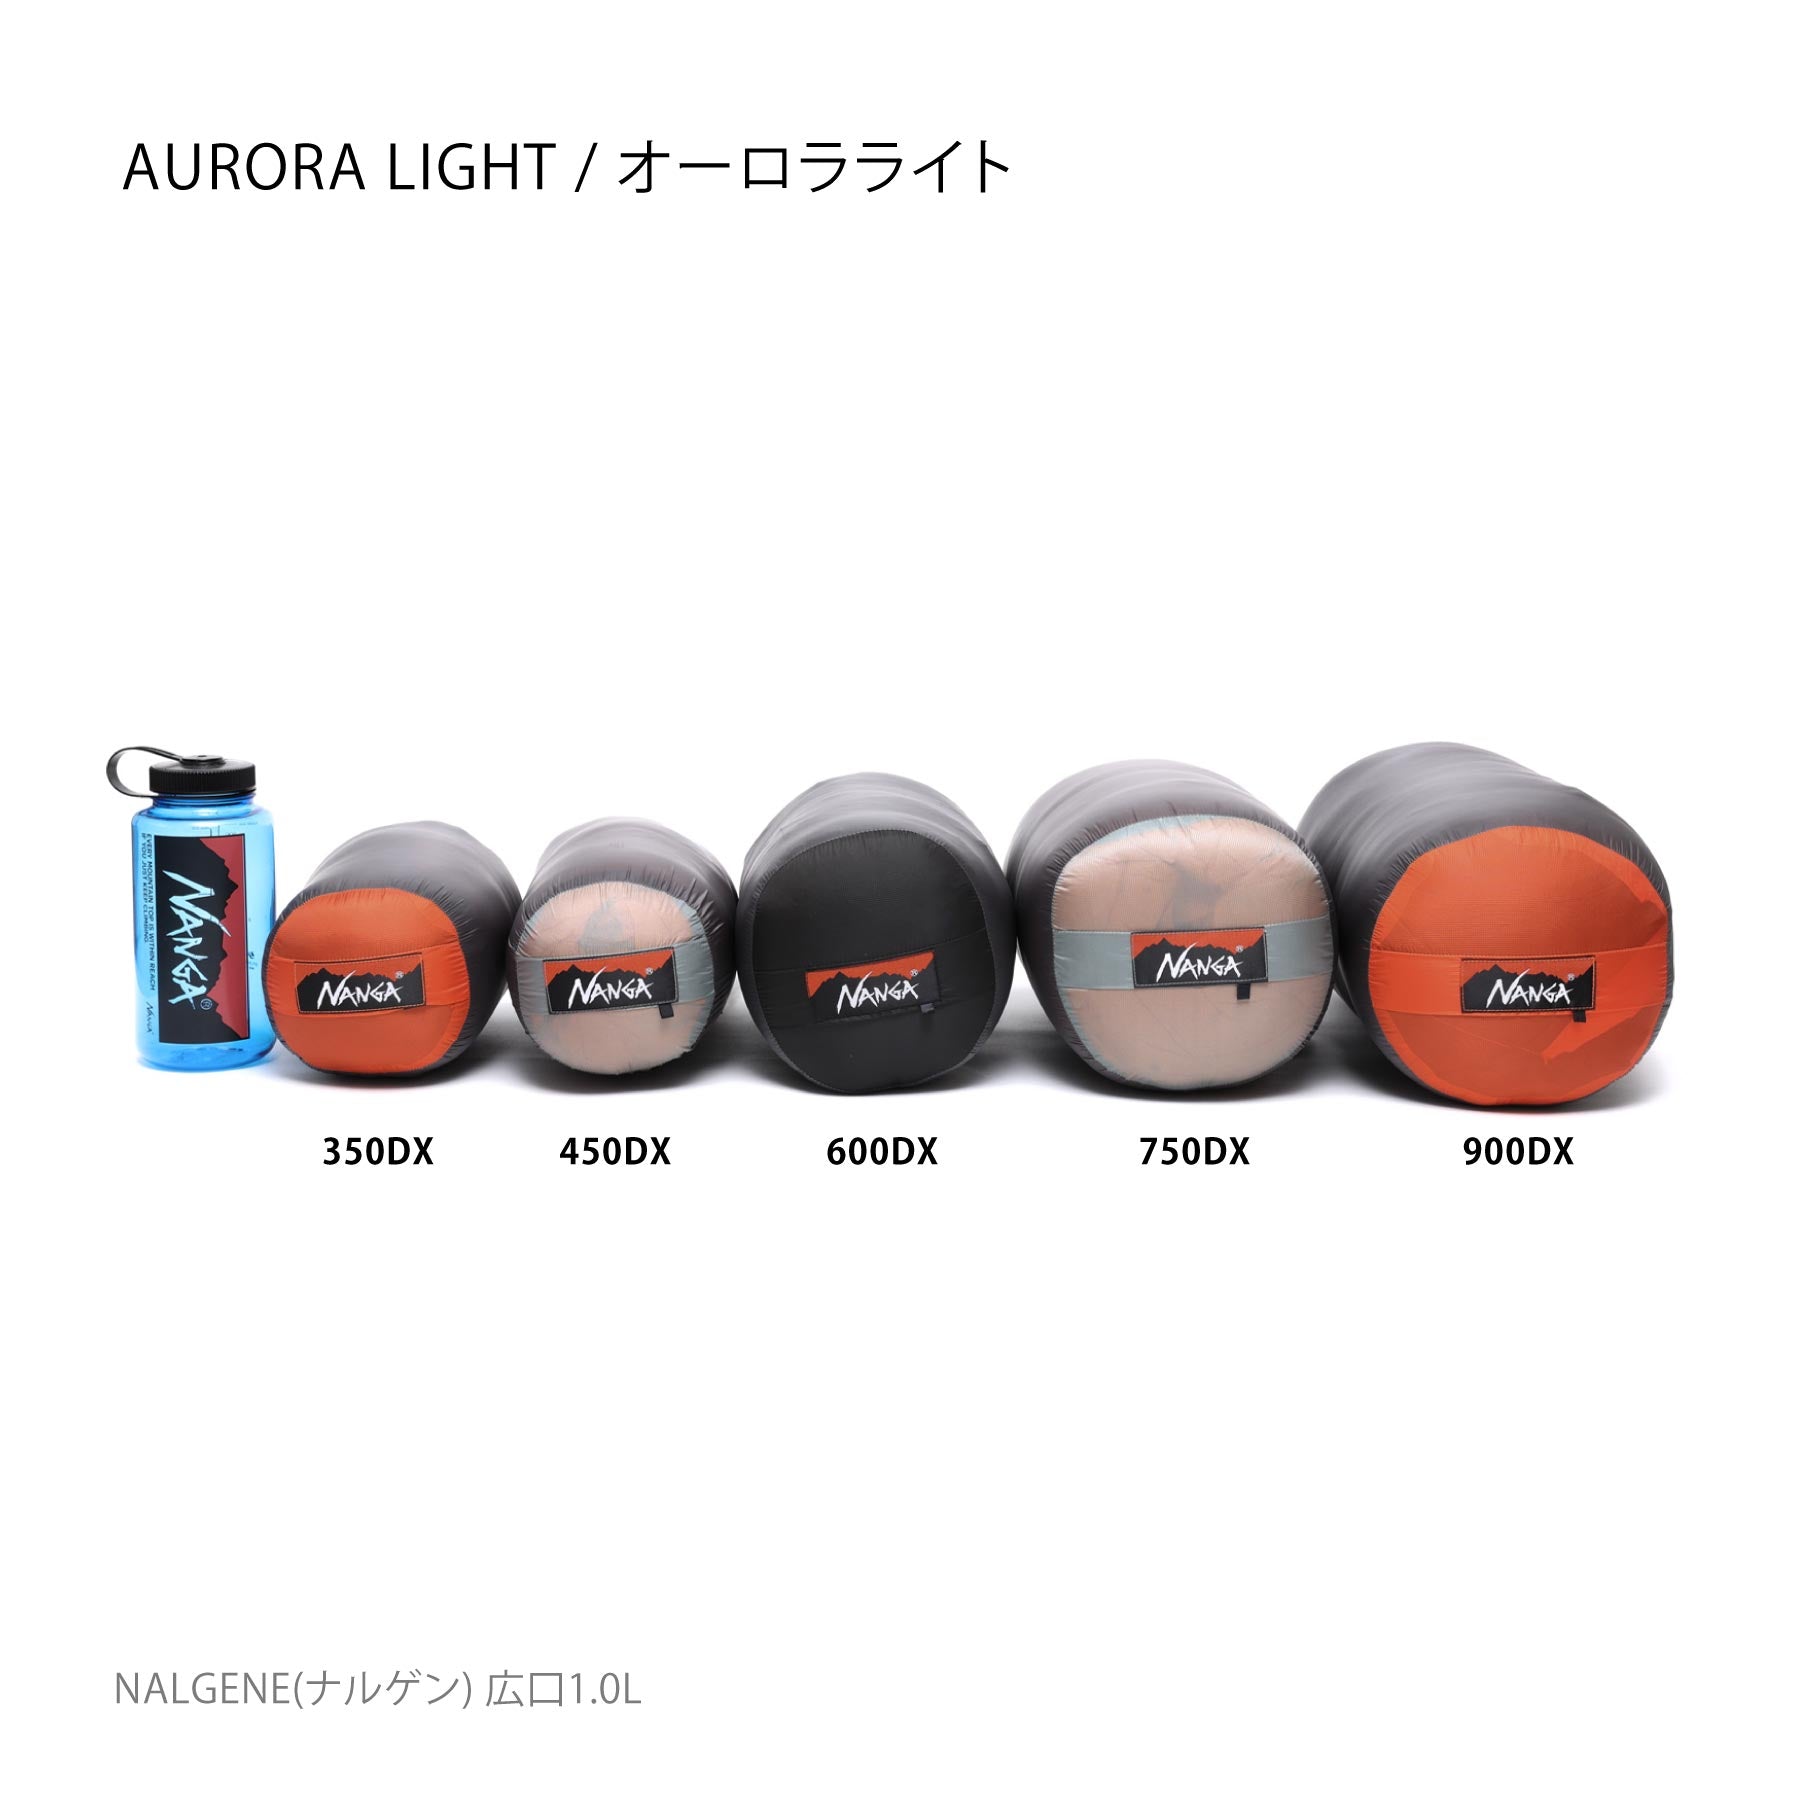 AURORA light 750 DX / オーロラライト750DX – NANGA ONLINE SHOP